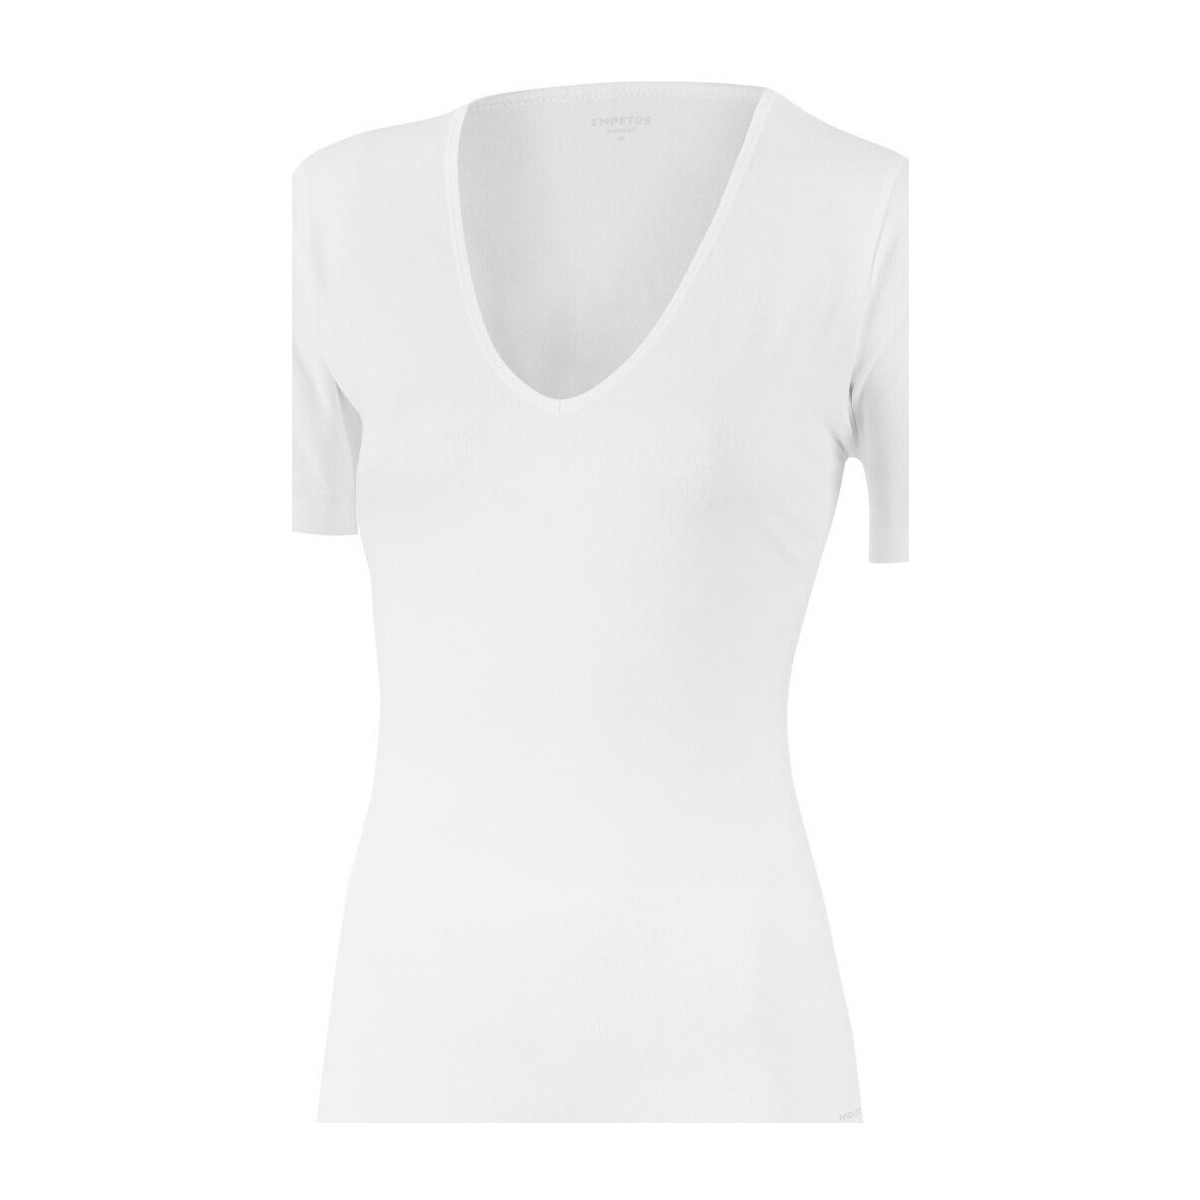 T-shirt με κοντά μανίκια Impetus Innovation Woman 8351898 001 Ύφασμα